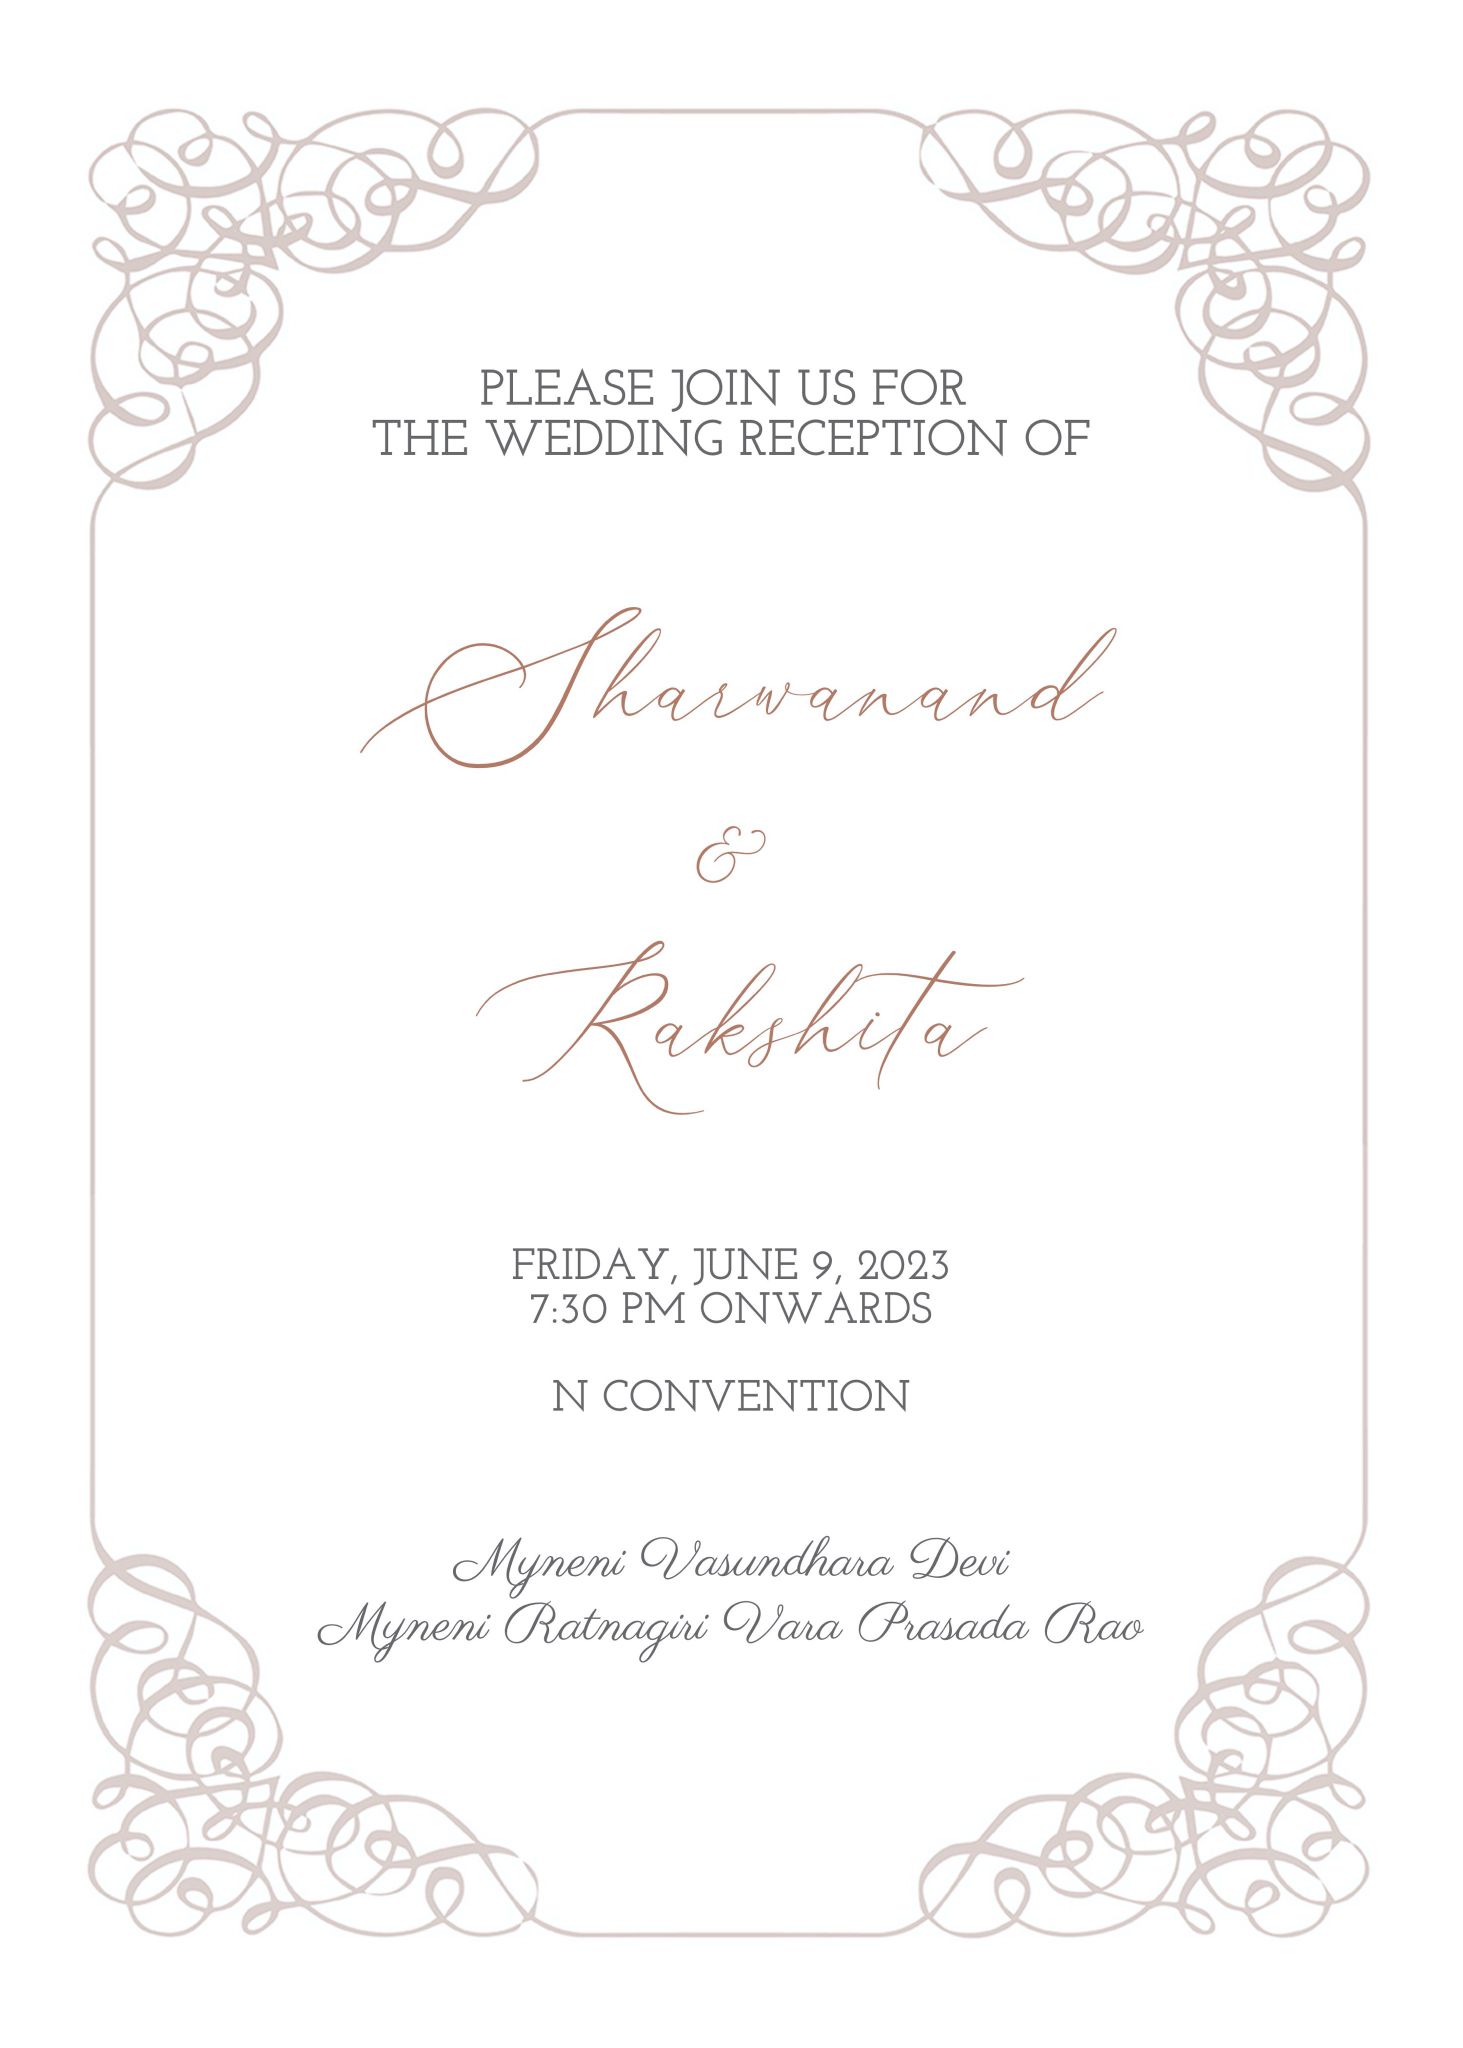 Sharwanand wedding reception and Varun Tej Engagement tomorrow